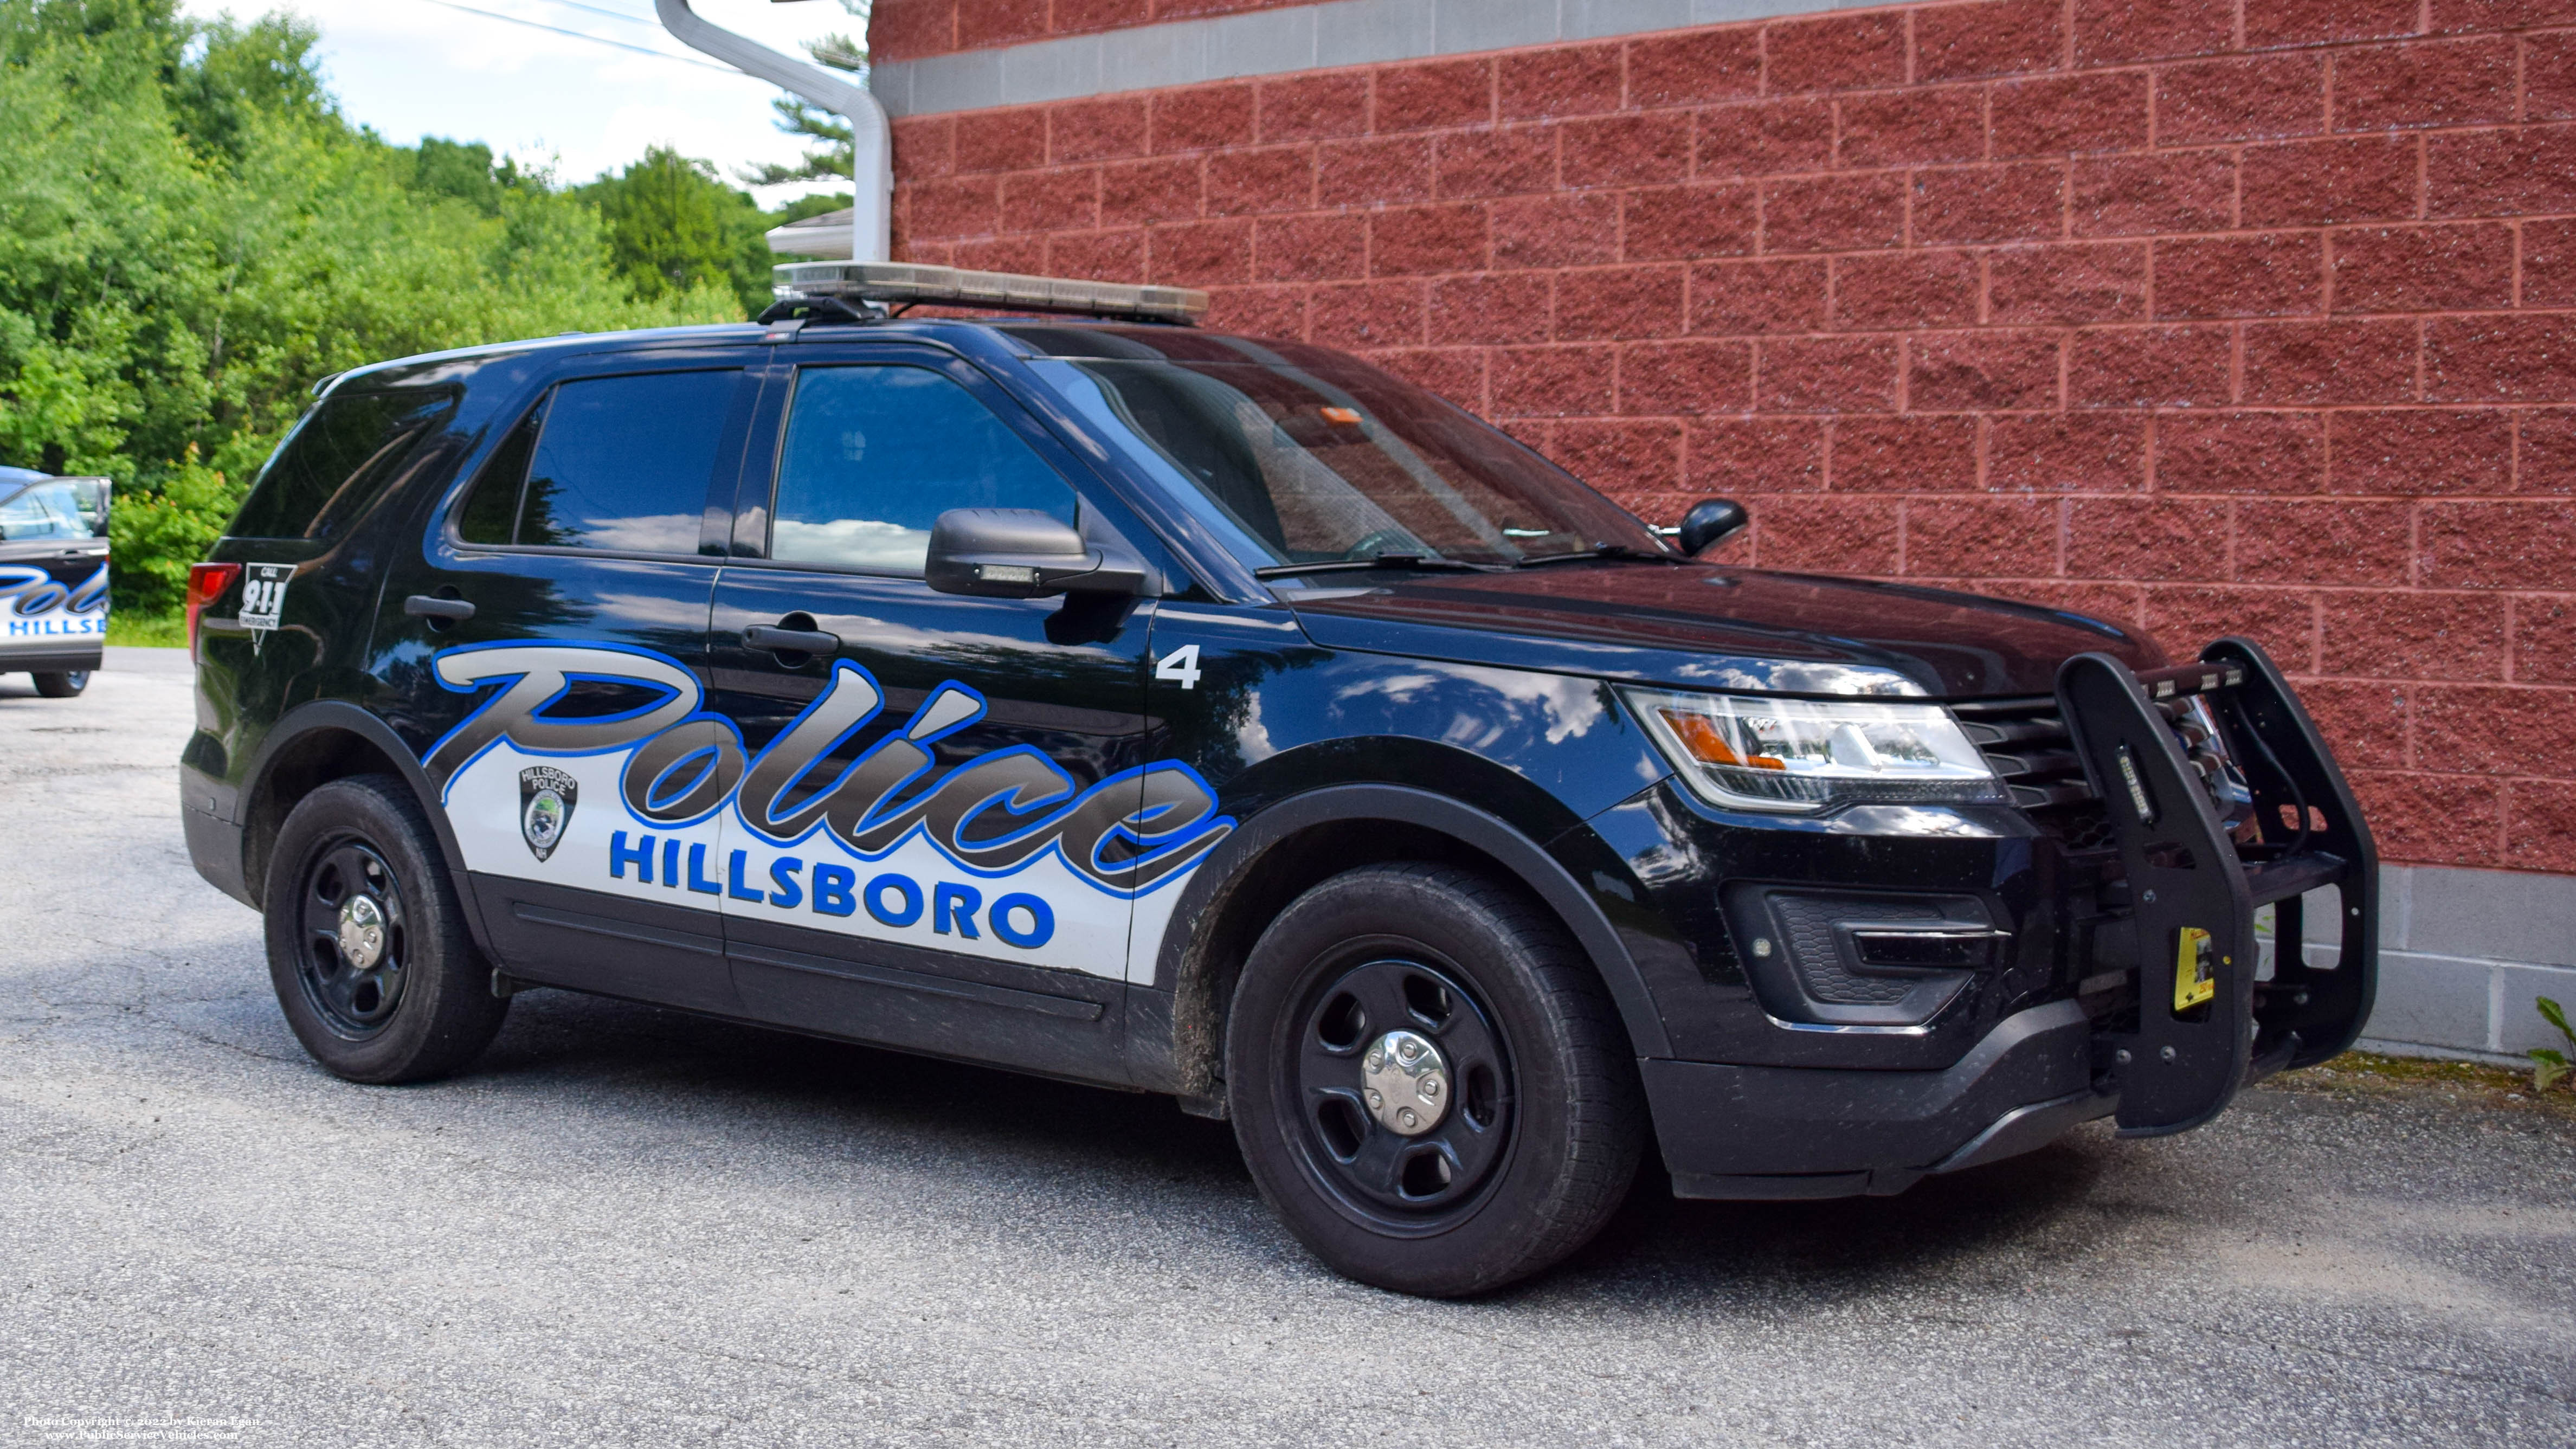 A photo  of Hillsborough Police
            Car 4, a 2016-2019 Ford Police Interceptor Utility             taken by Kieran Egan